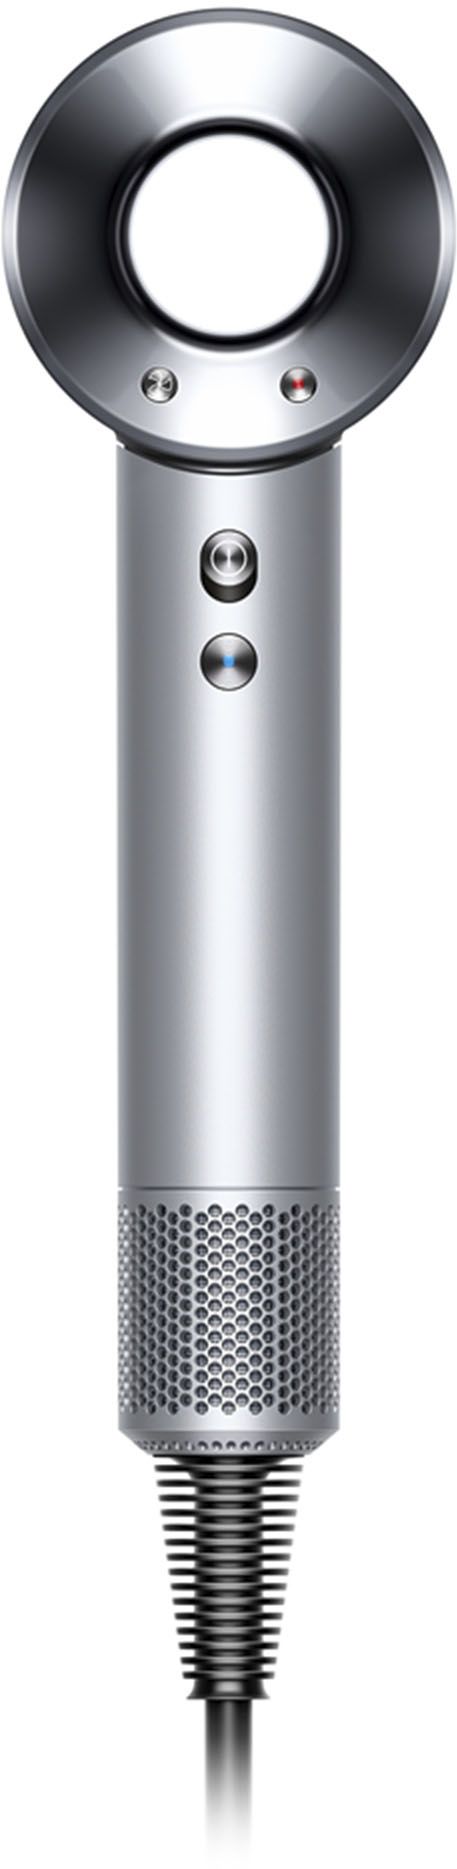 Dyson Supersonic Hair Dryer White/Silver 386840-01 - Best Buy | Best Buy U.S.